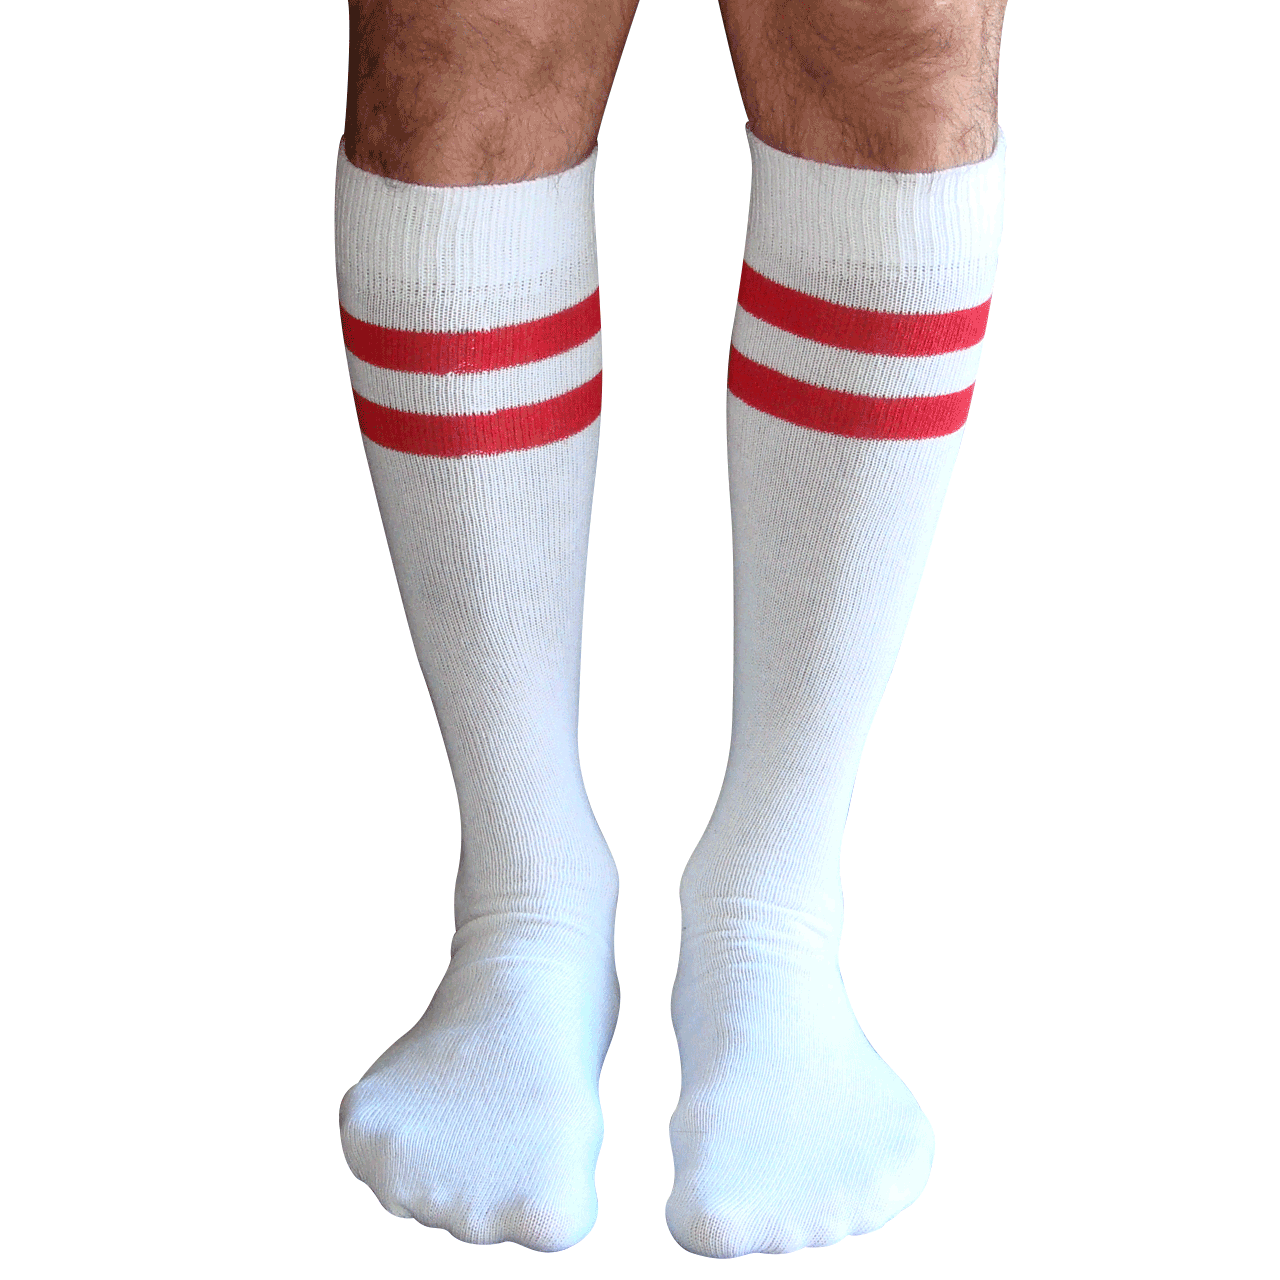 White with Red Stripes Tube Socks